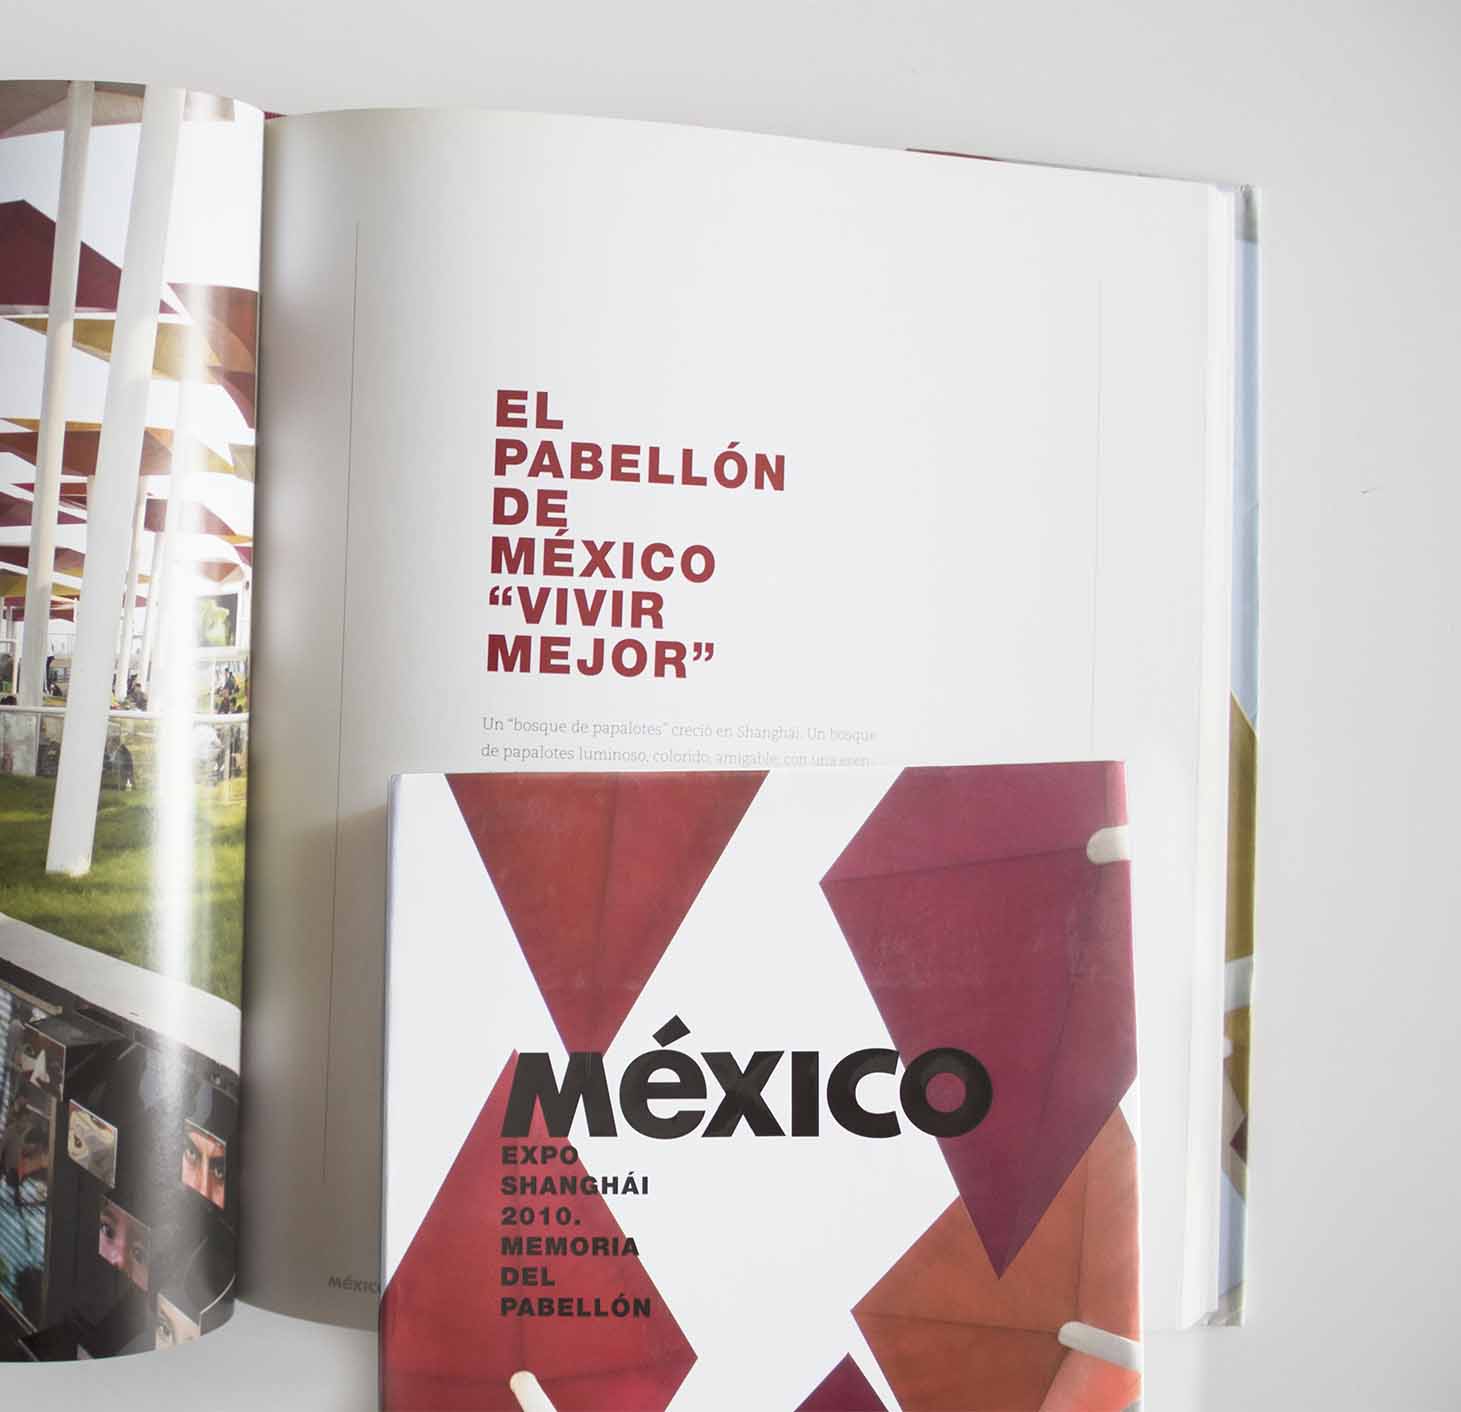 PROMÉXICO PUBLISHED THE MEMORIES OF THE MEXICAN PAVILION : SLOT STUDIO